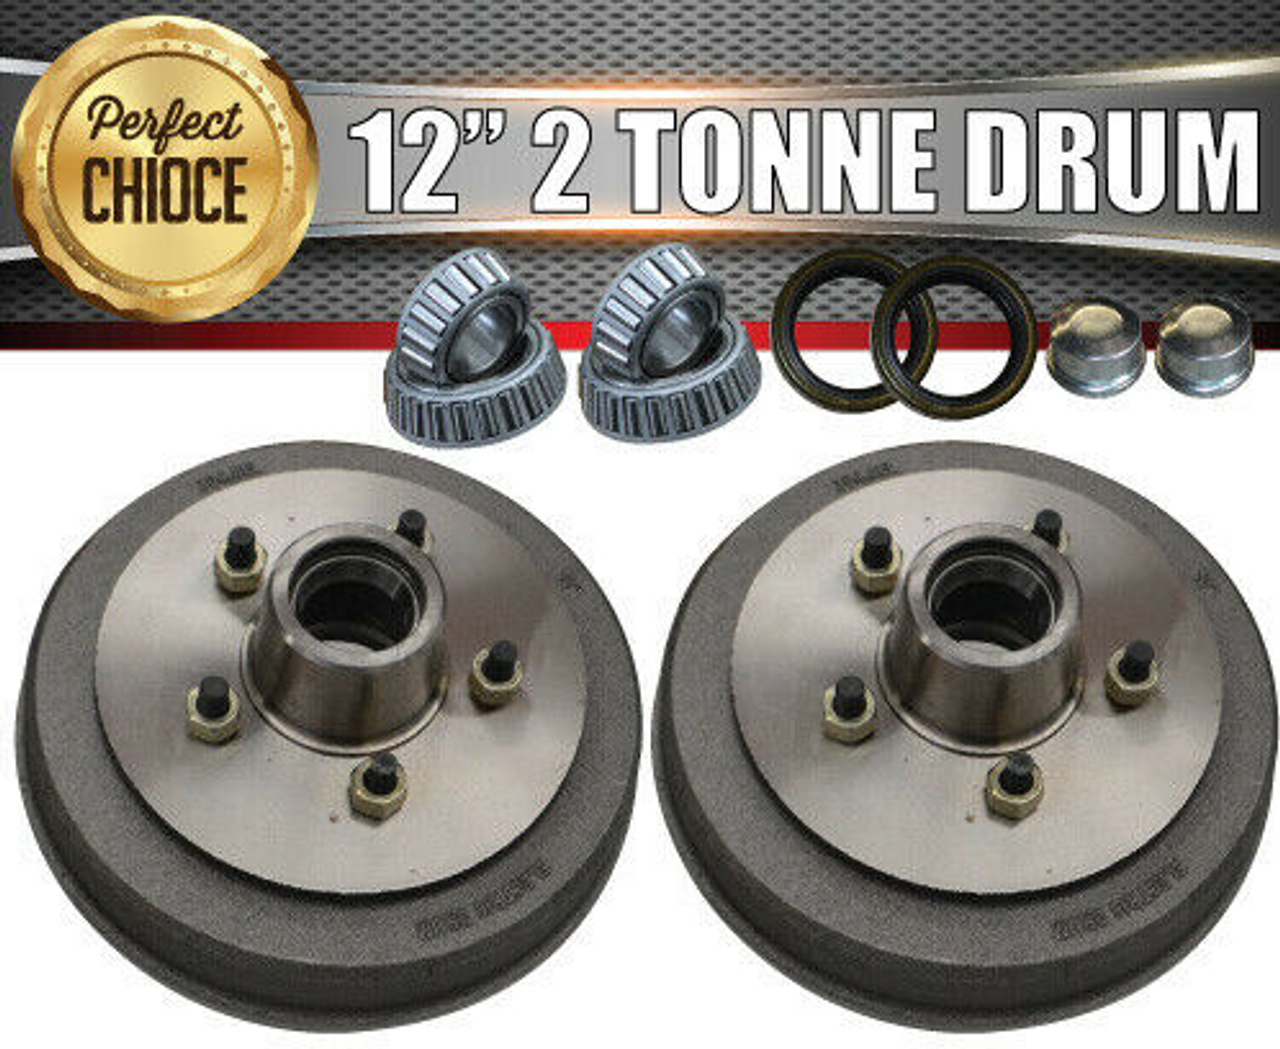 2x 12" 2 Tonne 5 Stud Electric Trailer Brake Drums & Bearings 30210 & 15123